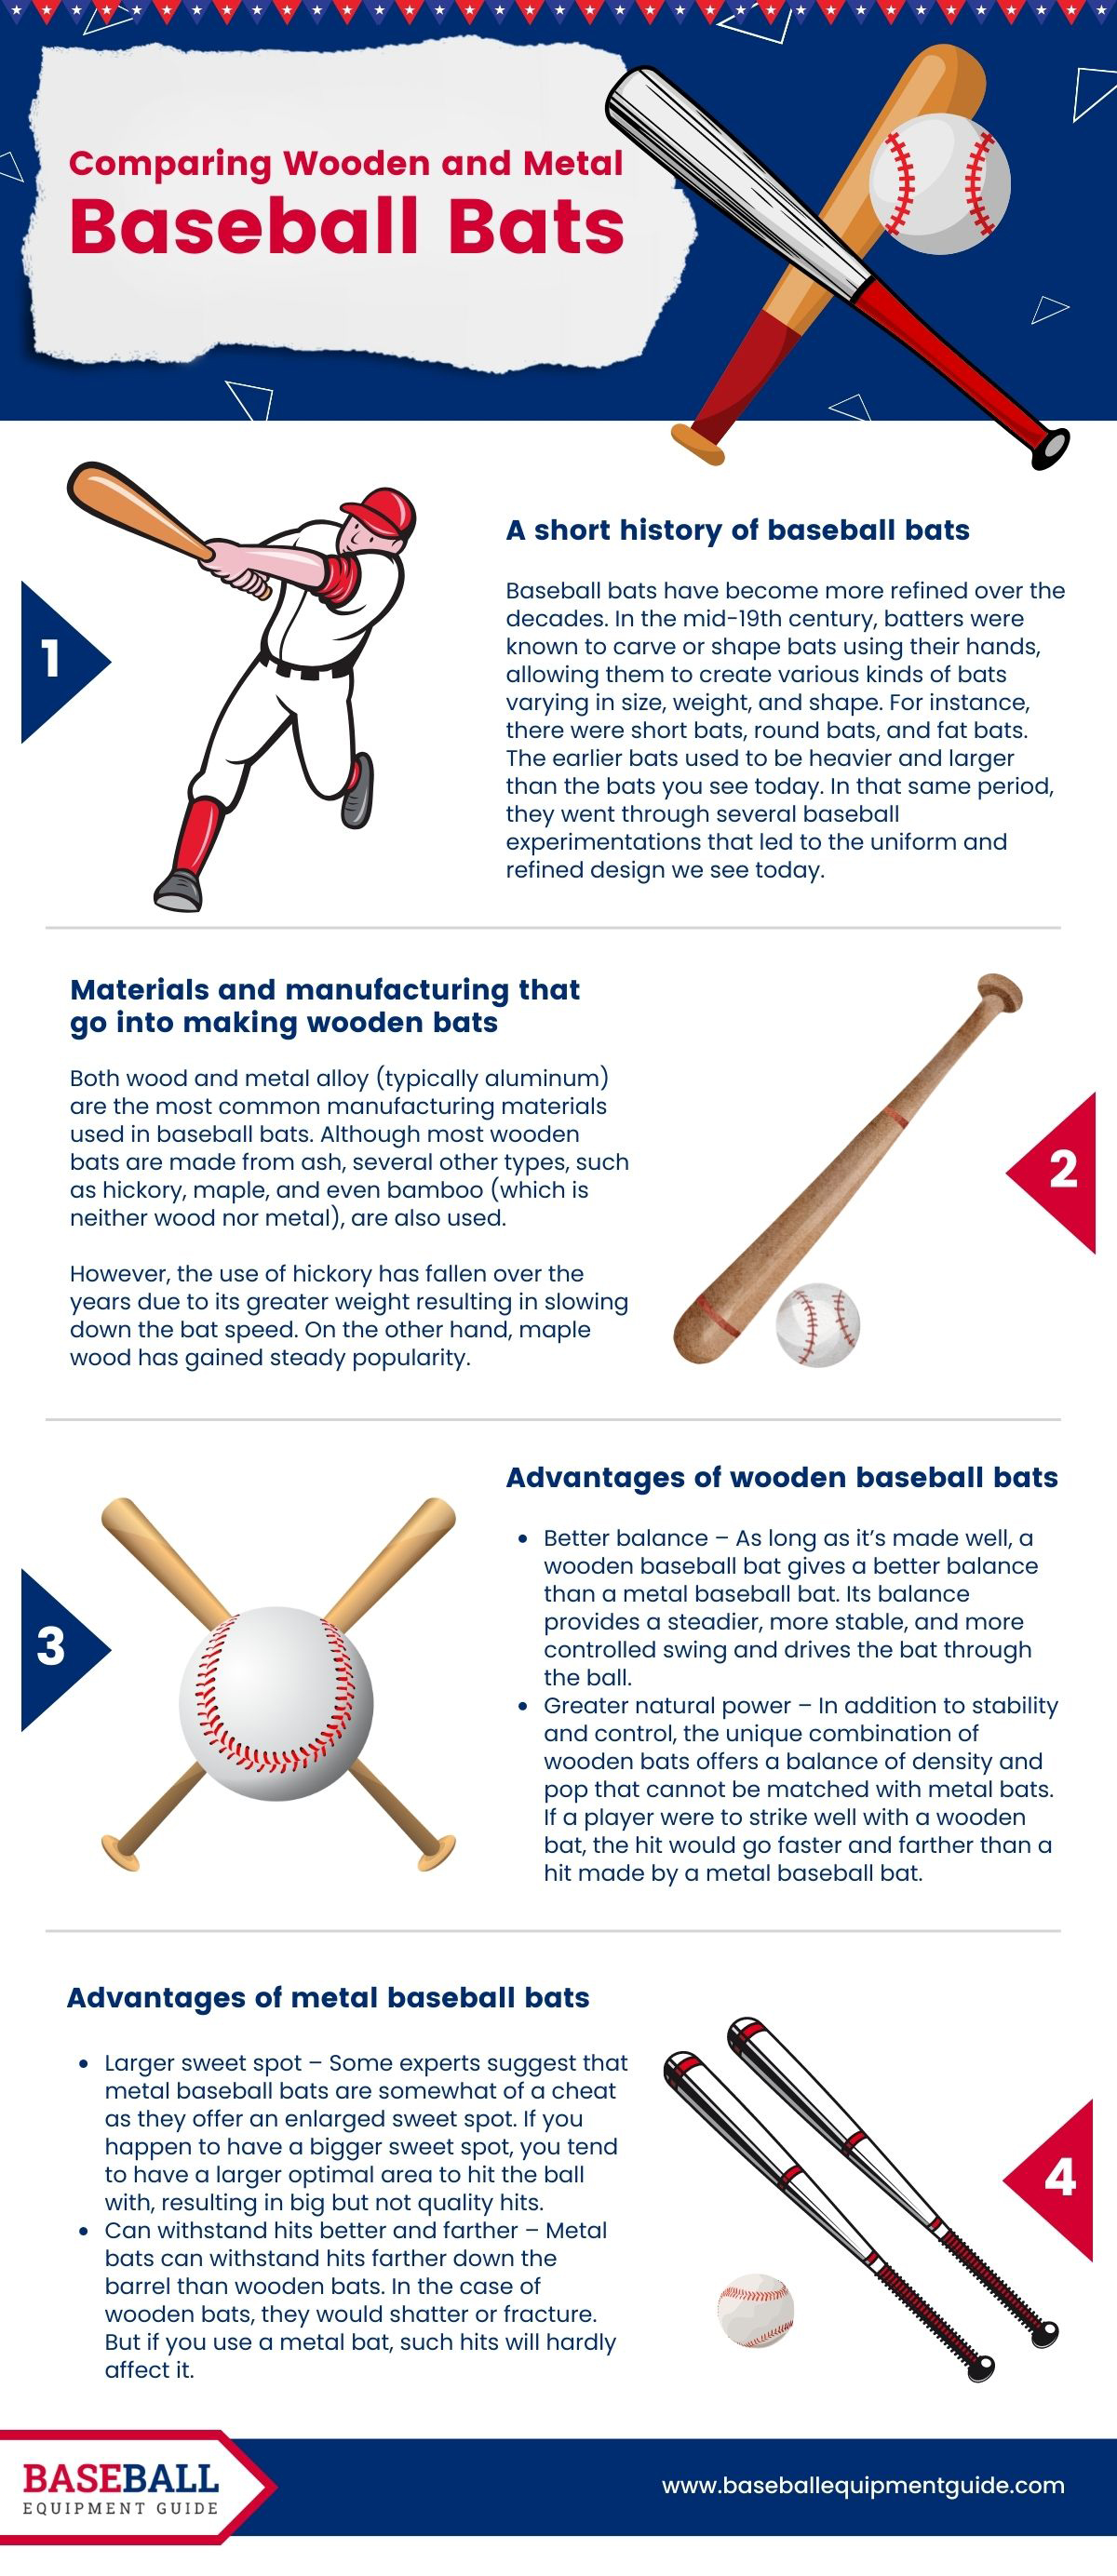 Comparing Wooden and Metal Baseball Bats